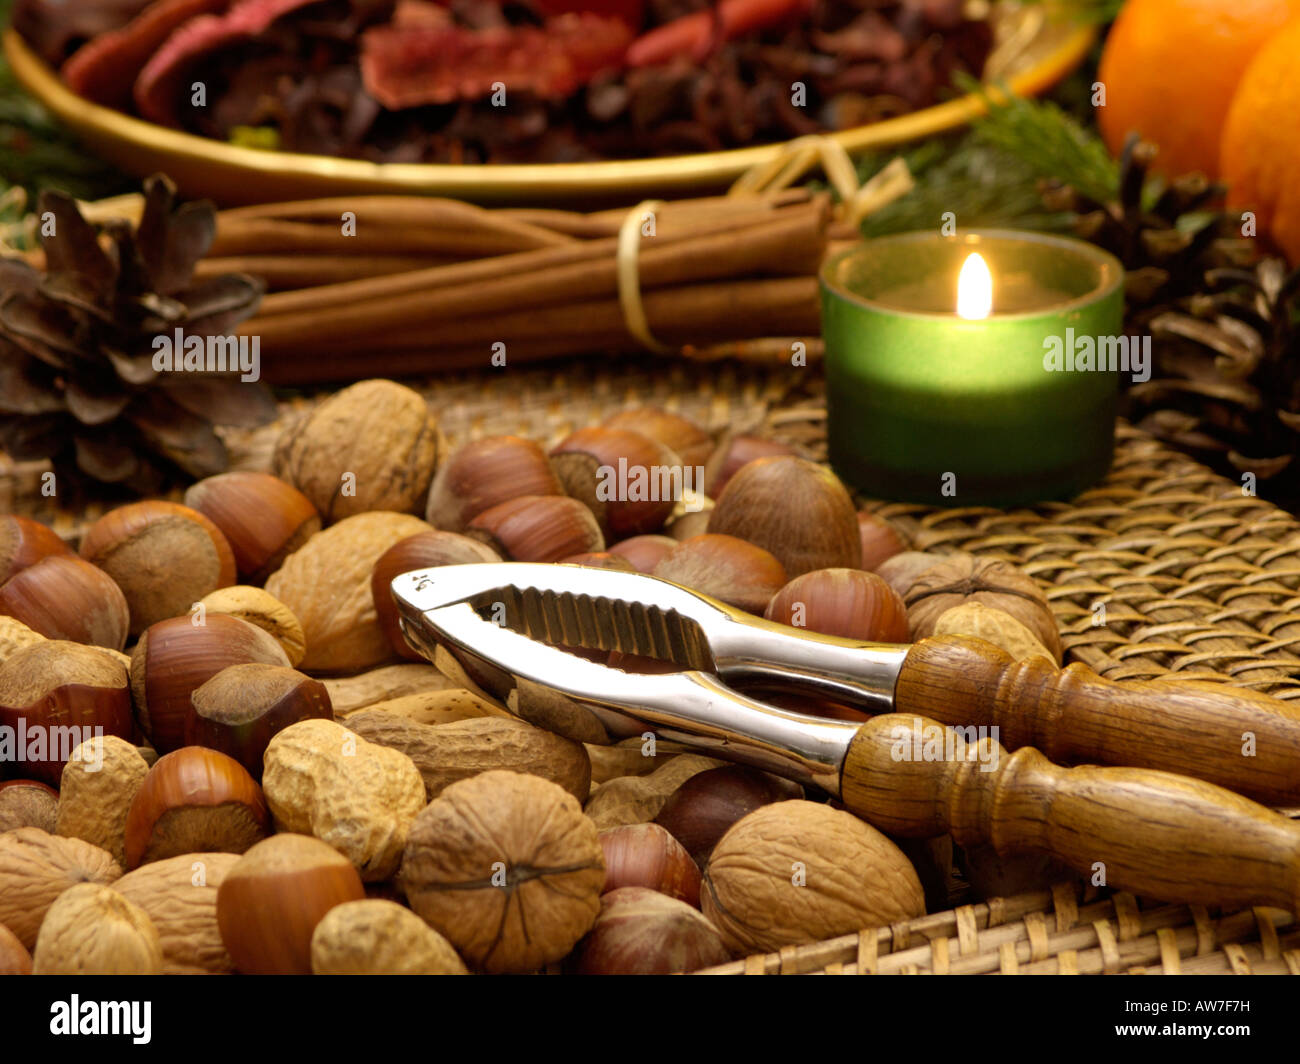 Filbert (Corylus maxima), English walnut (Juglans regia) and peanut (Arachis hypogaea) with nutcracker Stock Photo